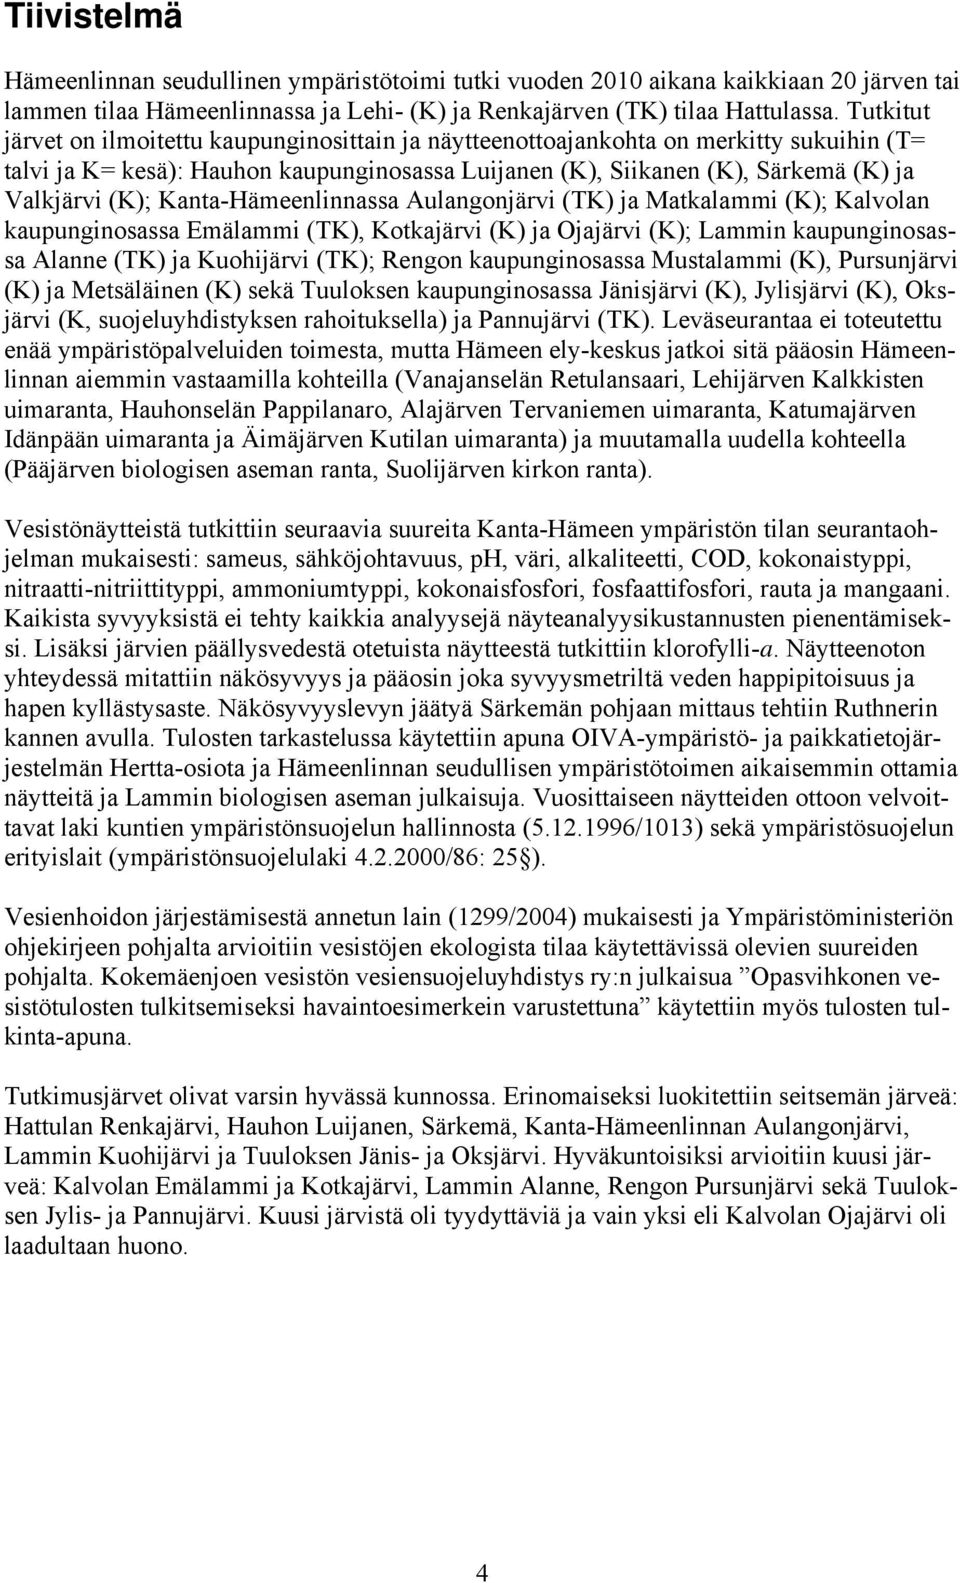 Kanta-Hämeenlinnassa Aulangonjärvi (TK) ja Matkalammi (K); Kalvolan kaupunginosassa Emälammi (TK), Kotkajärvi (K) ja Ojajärvi (K); Lammin kaupunginosassa Alanne (TK) ja Kuohijärvi (TK); Rengon